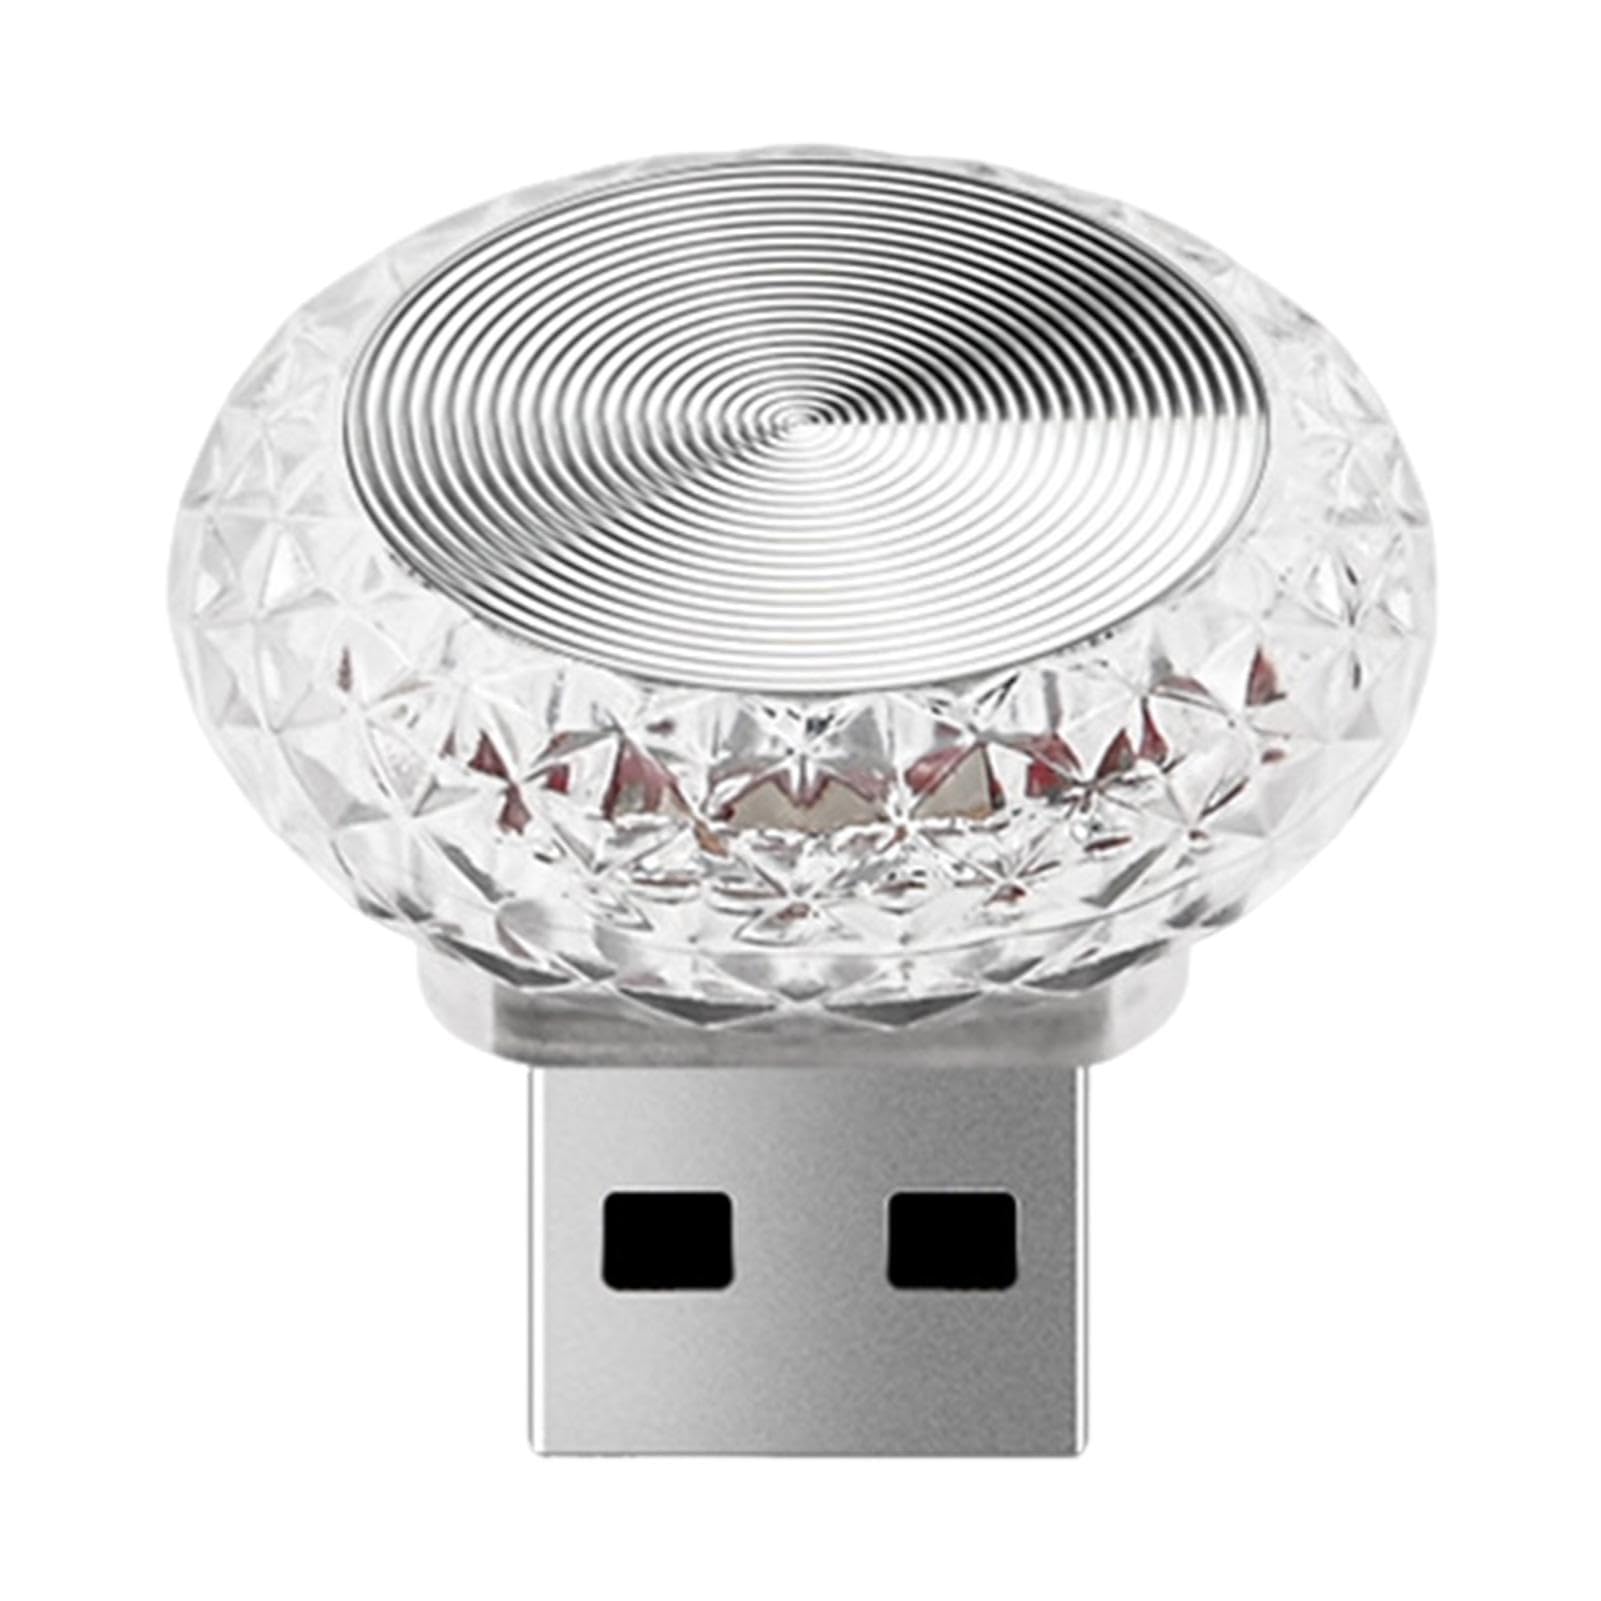 Auto-LED-Leuchten für den Innenraum, USB-Stecker - Bunte LED-USB-Auto-Innenraum-Atmosphärenlampen - RGB-Auto-Innenraum-Atmosphärenlichter für universelle Laptop-Tastatur von Shenrongtong